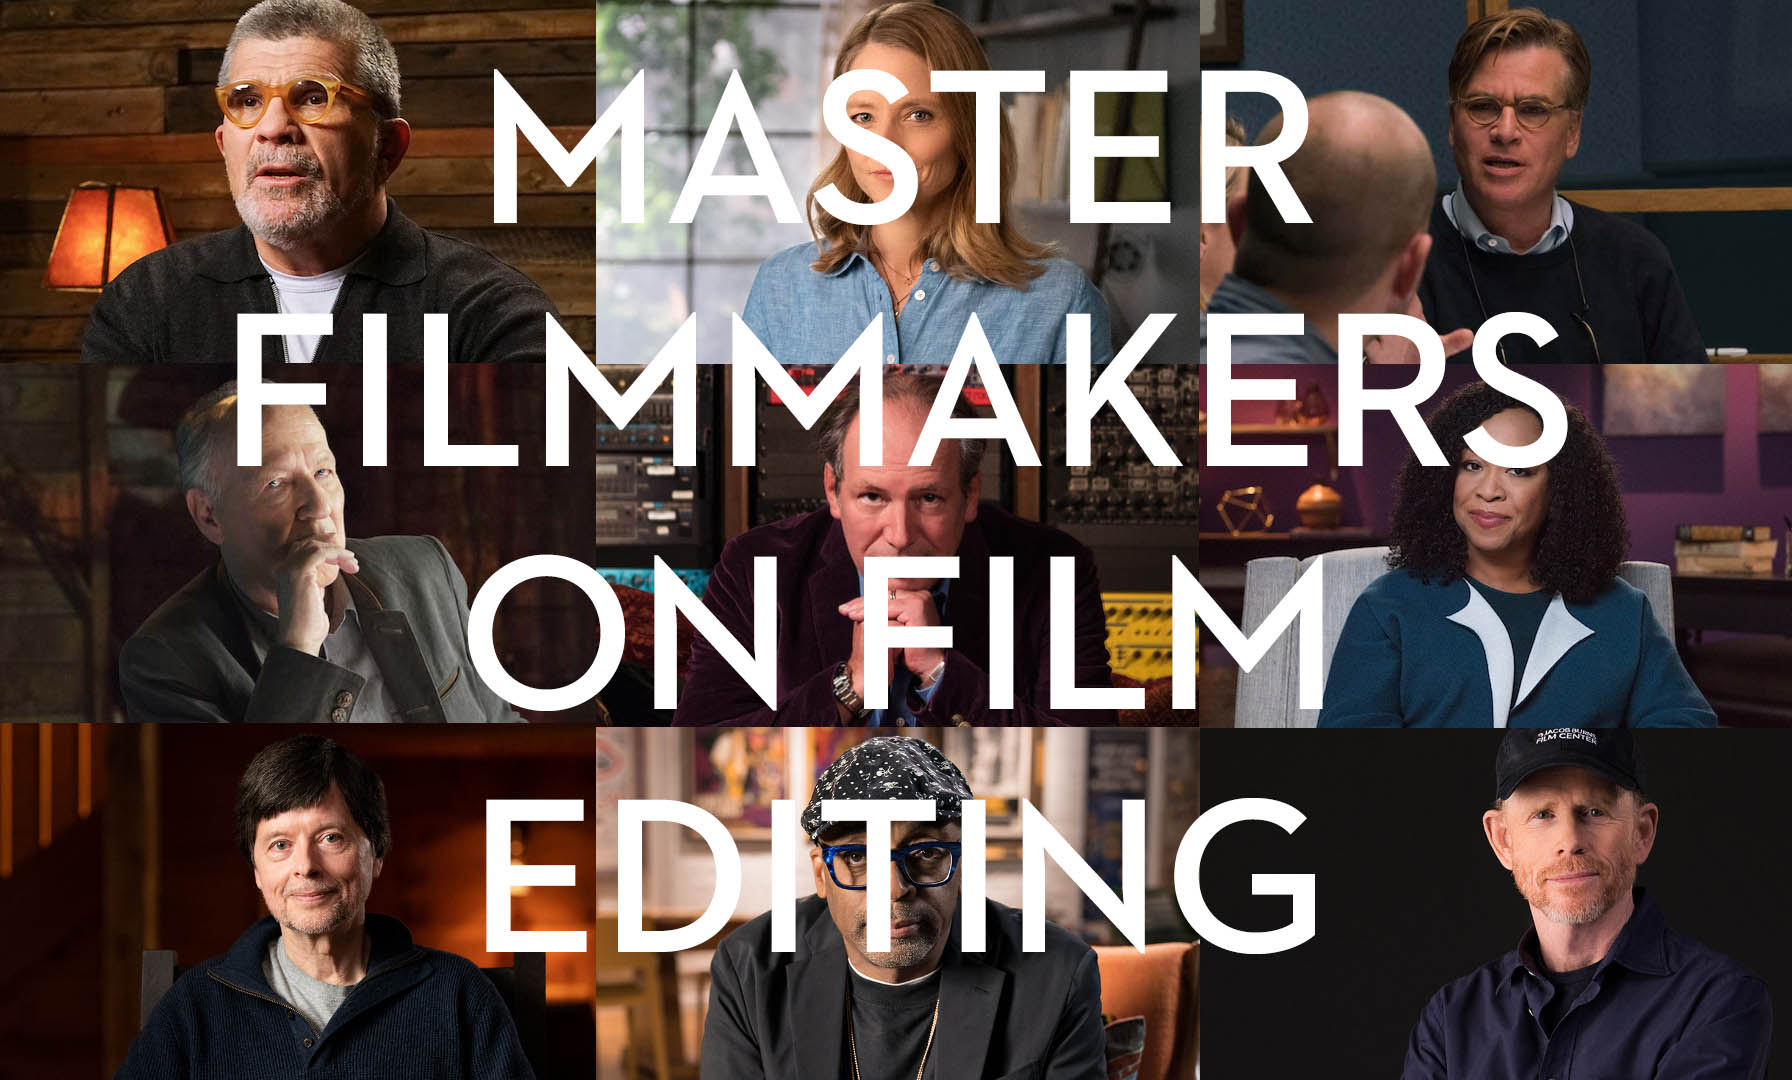 Masterclass filmmakers on film editing